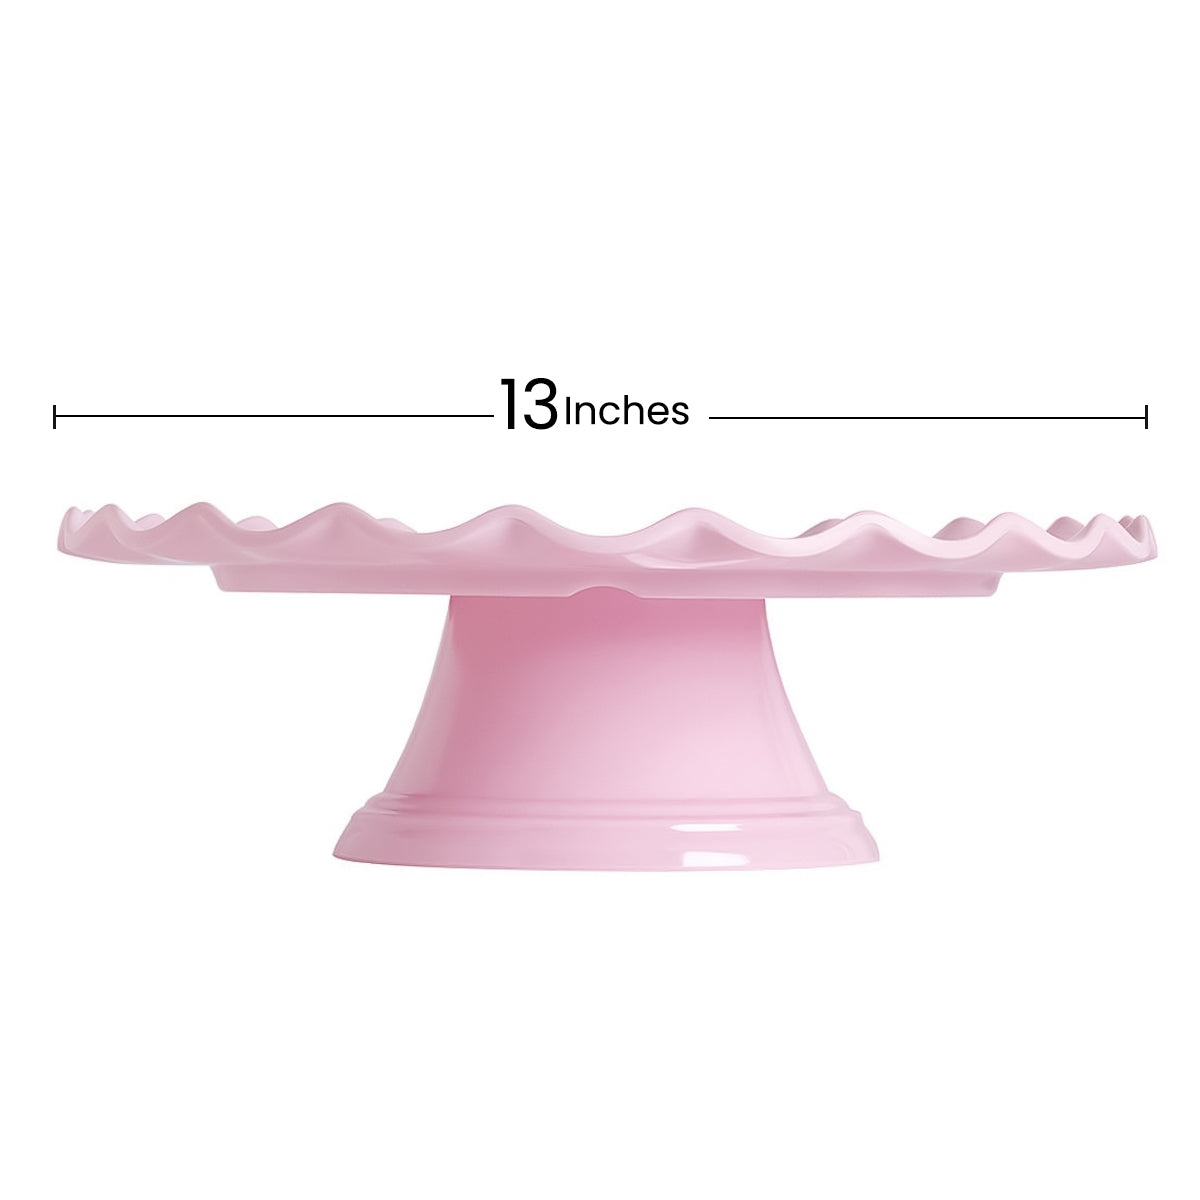 Melamine Wave Cake Stand Pink (13 inches) -RFAQK 